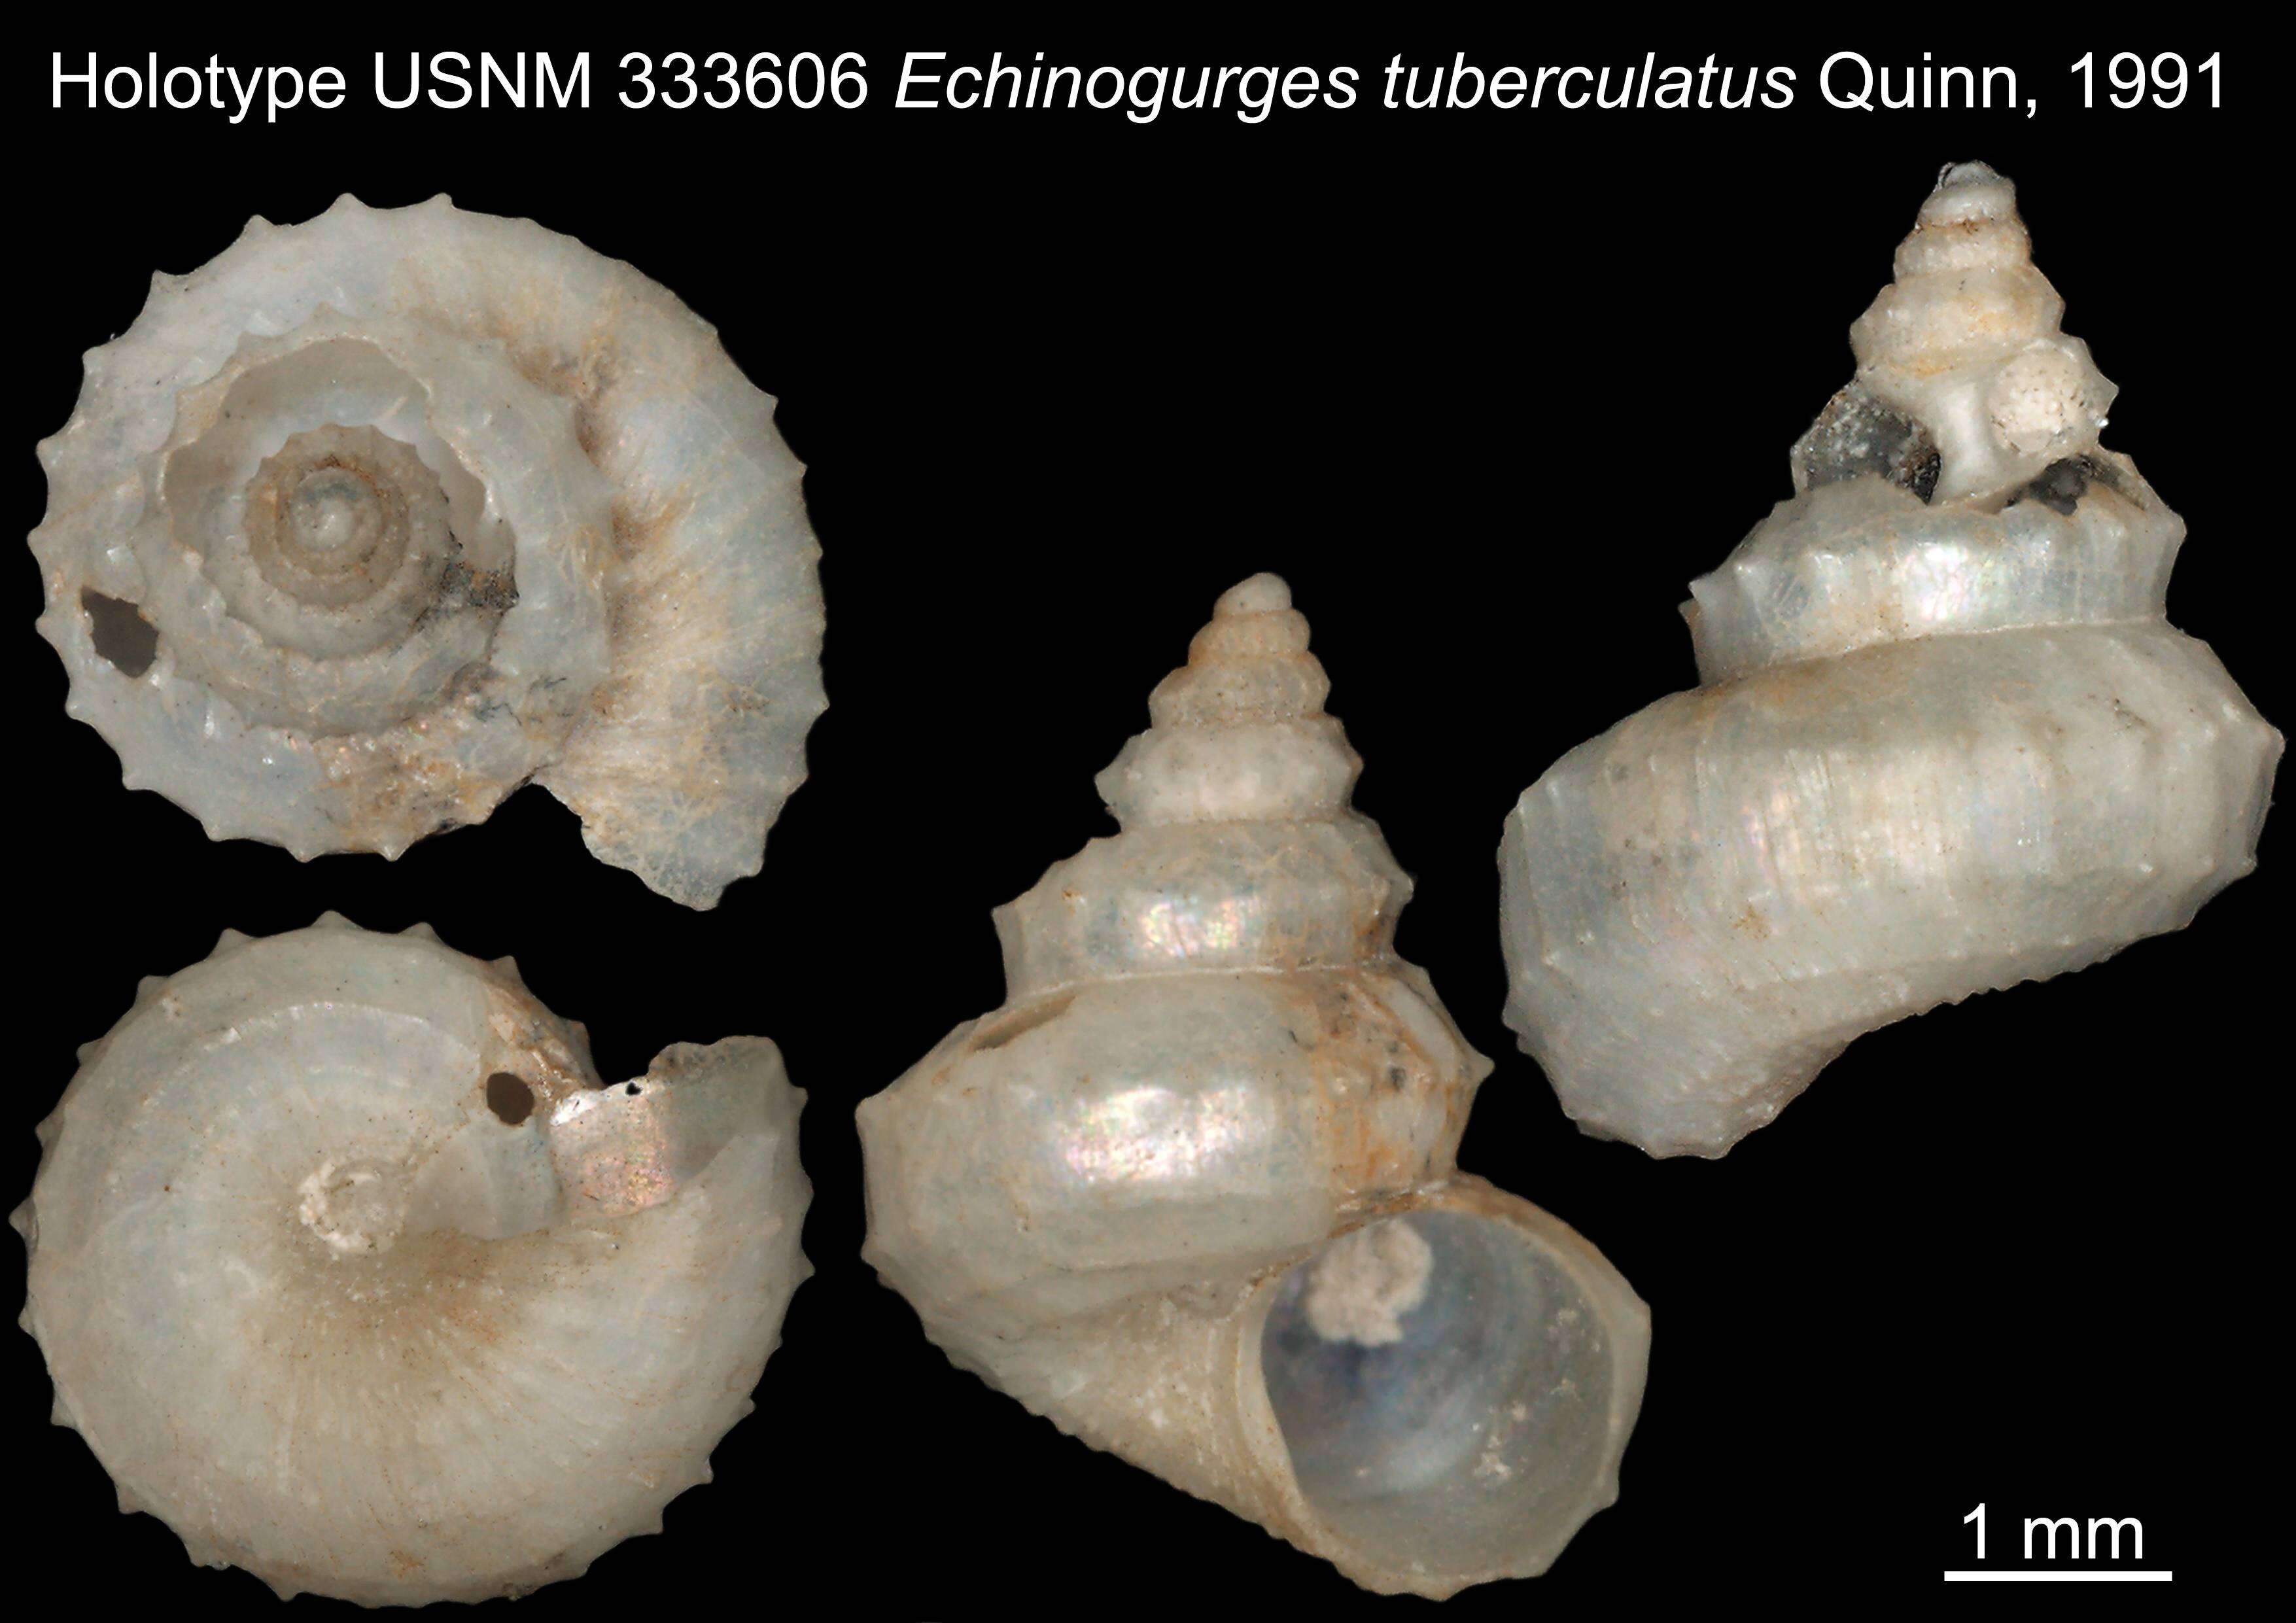 Image of Echinogurges tuberculatus Quinn 1991